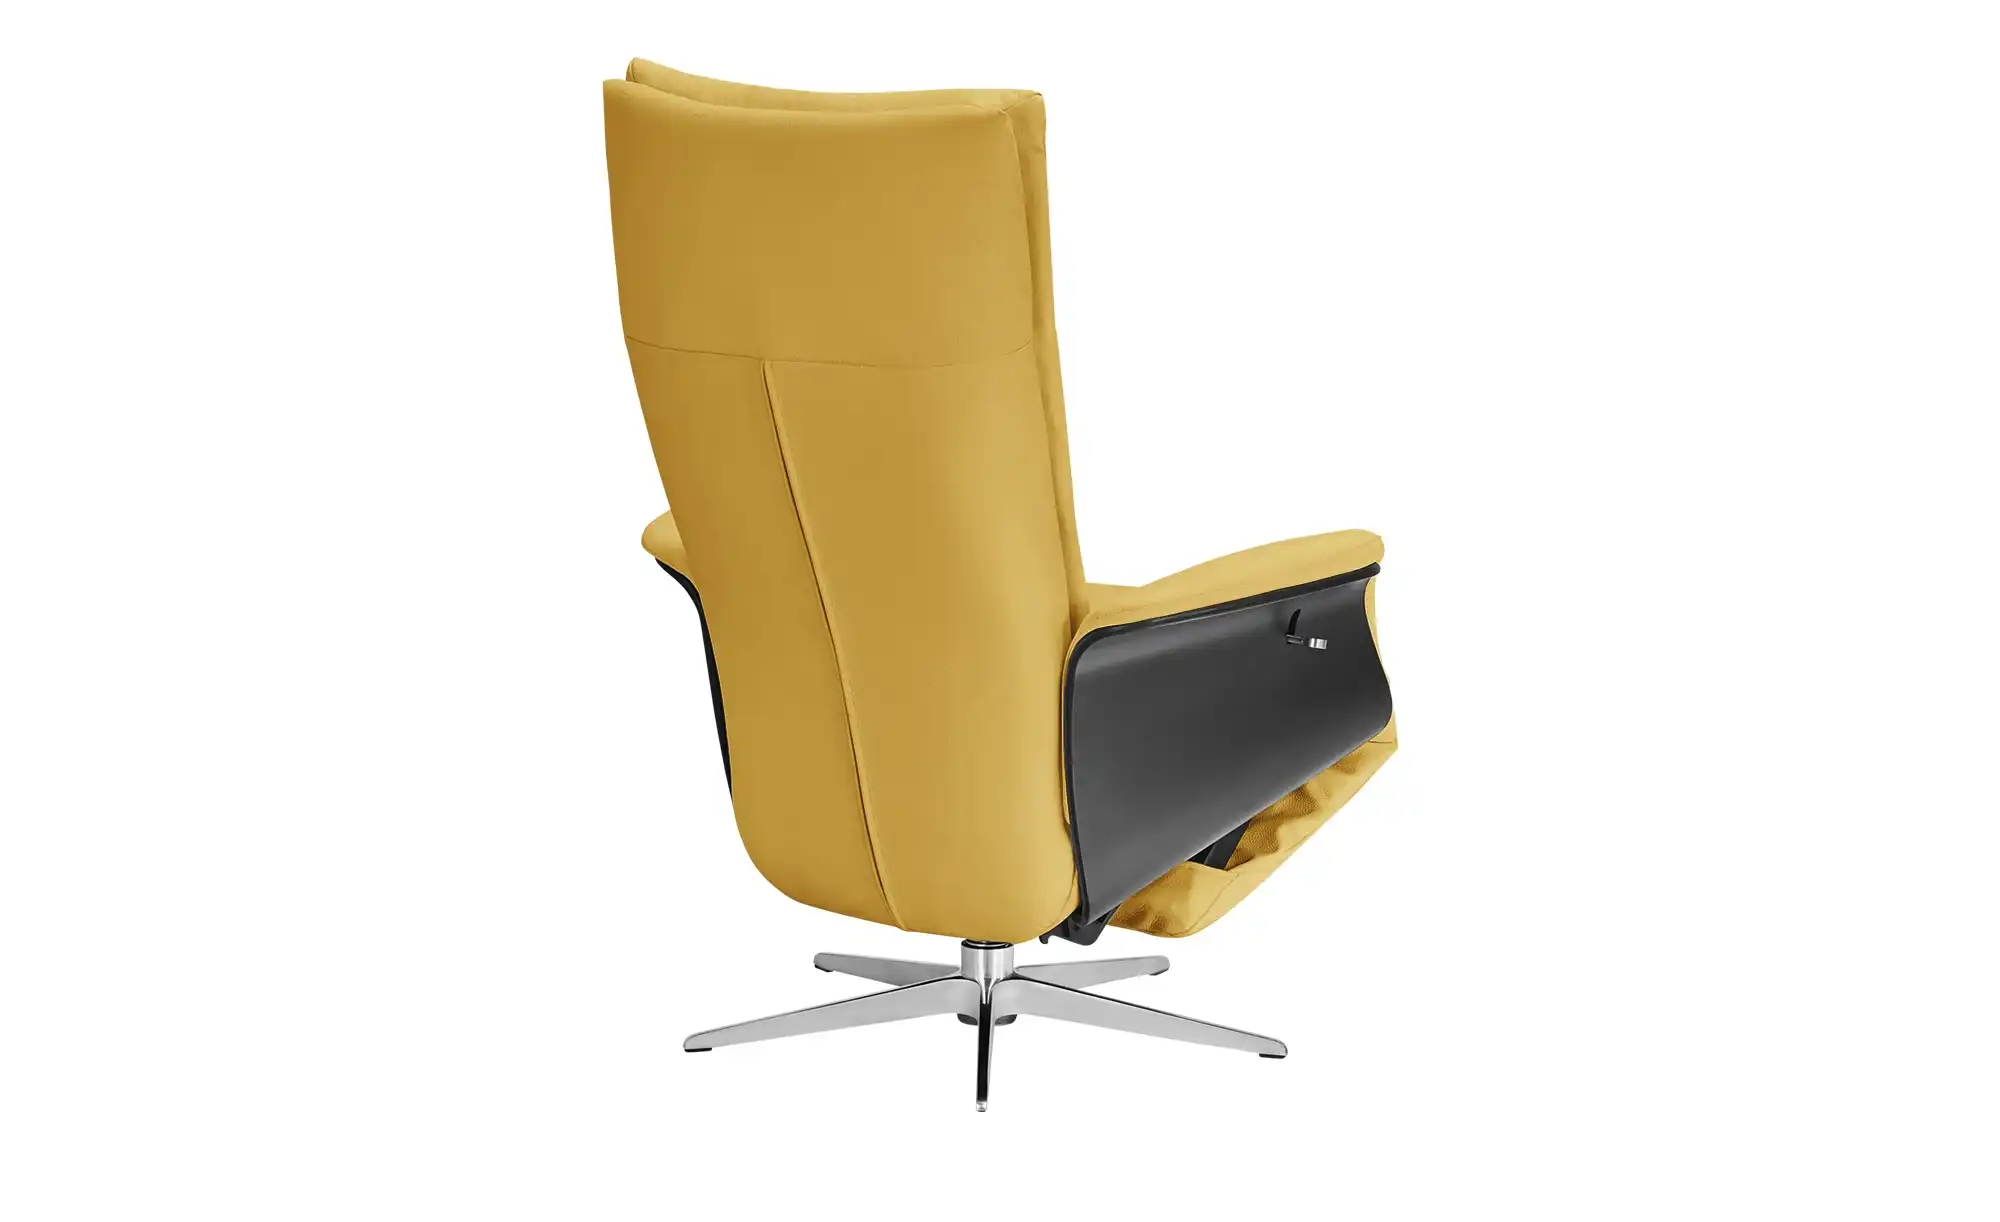 Relaxsessel Gelb : Sessel In Gelb Online Kaufen Otto - Relaxsessel online kaufen » otto ...